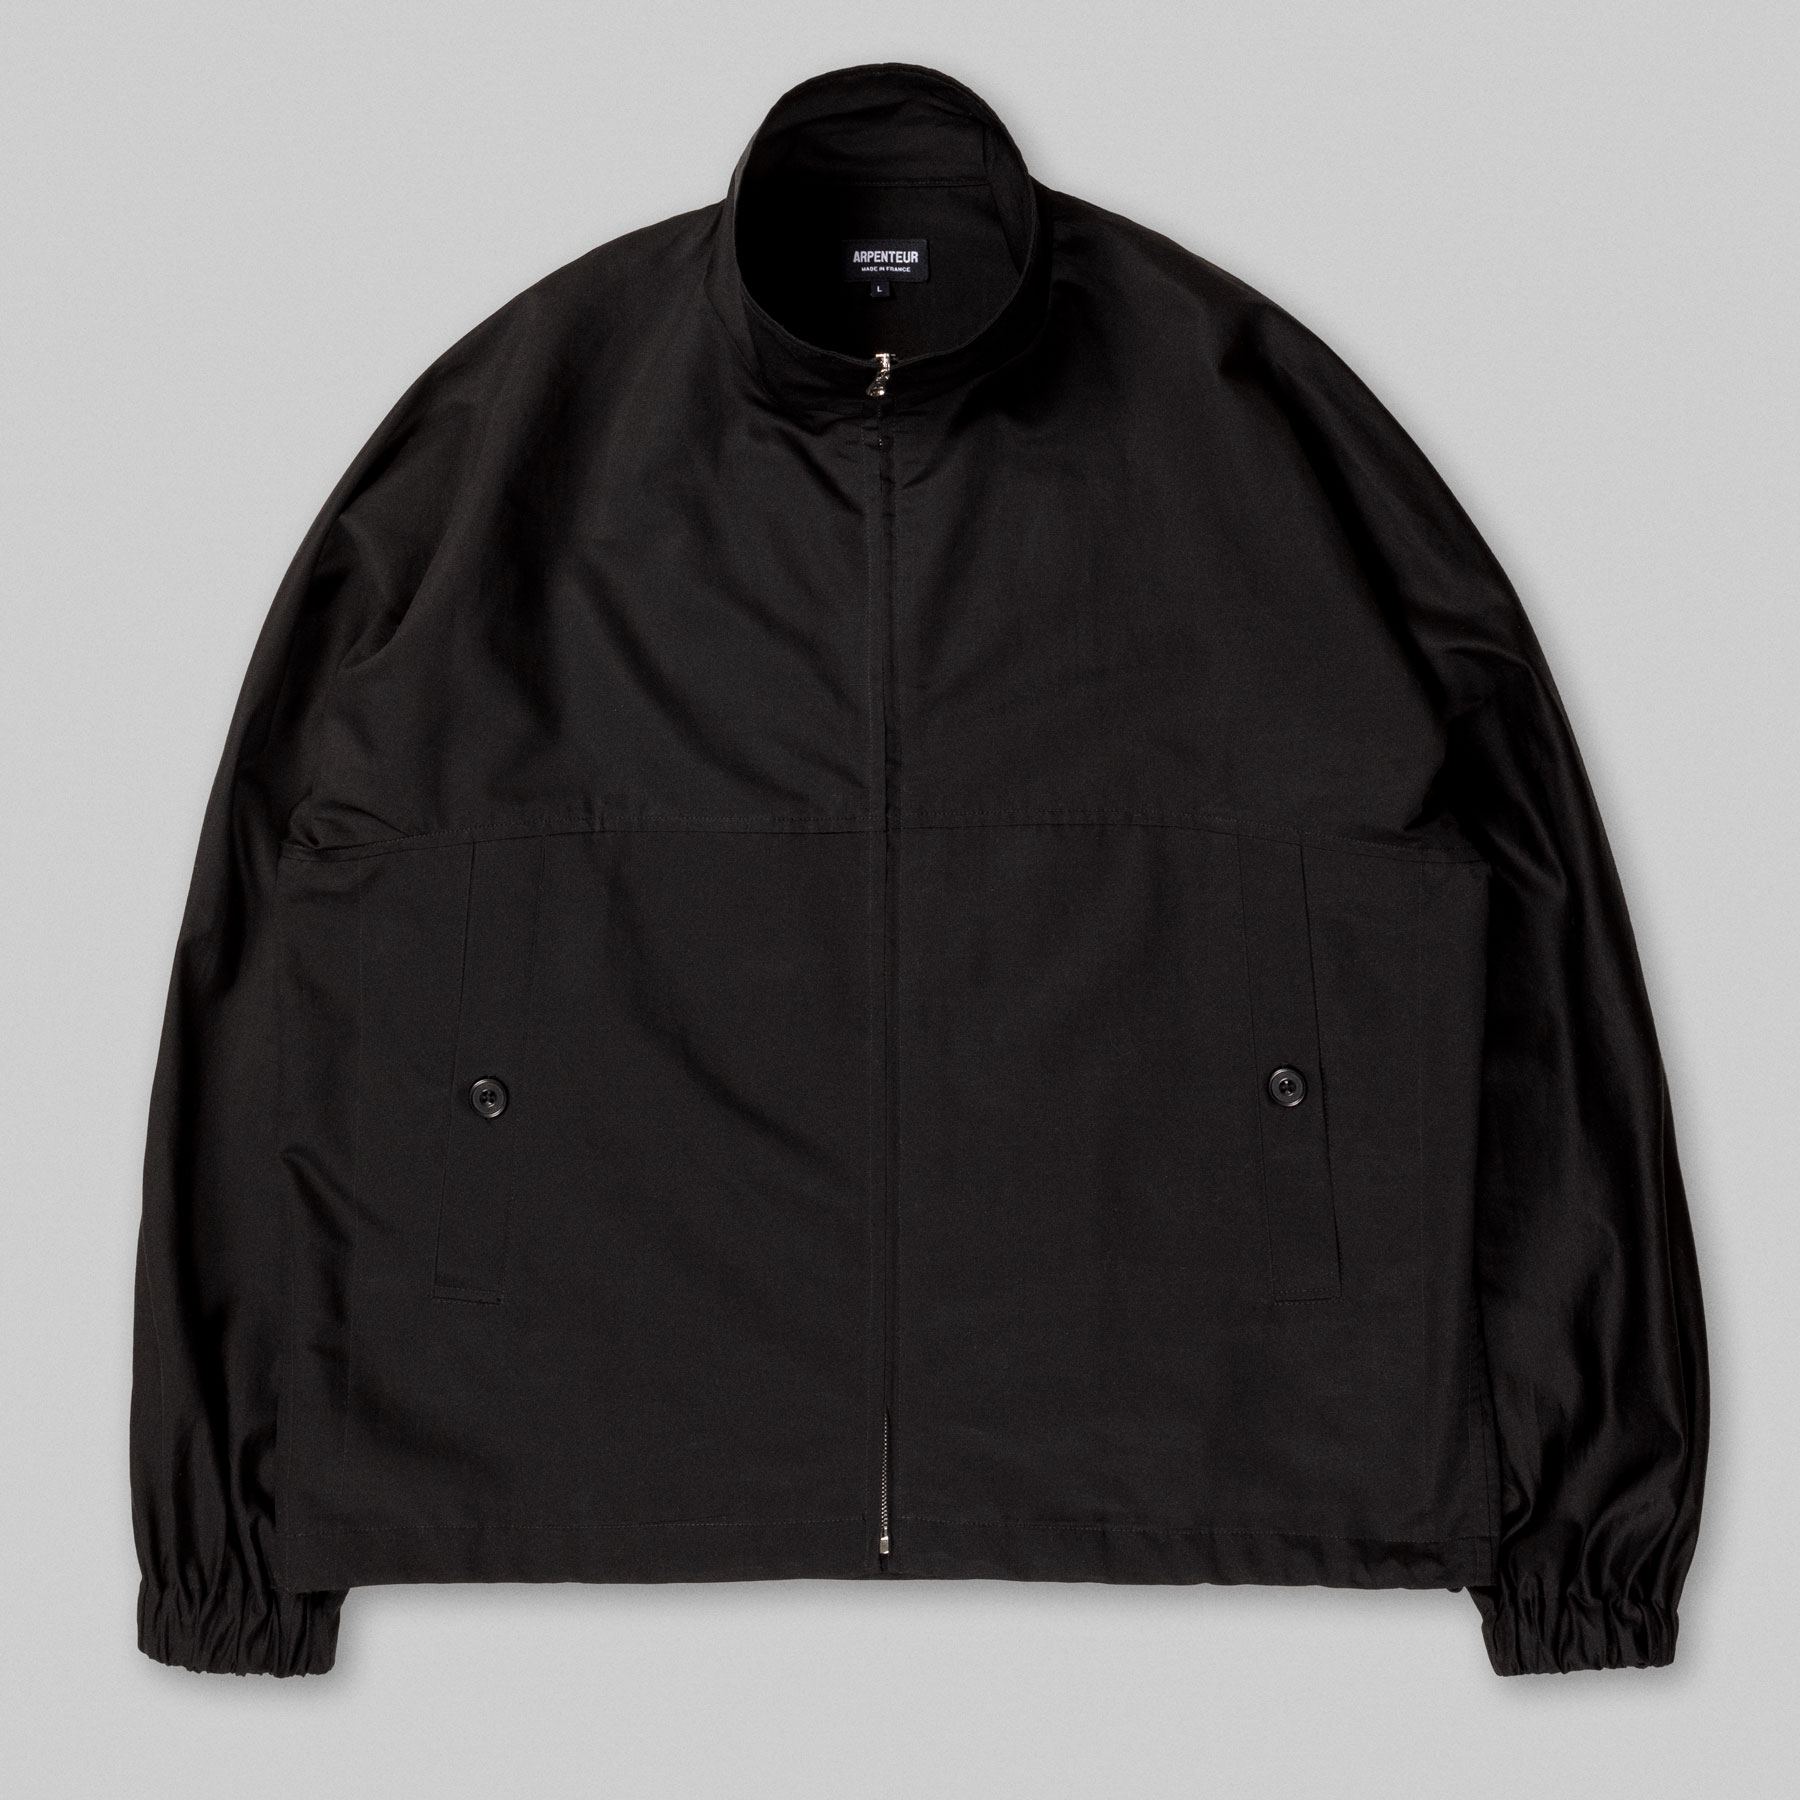 OPALE jacket by ARPENTEUR in Black color